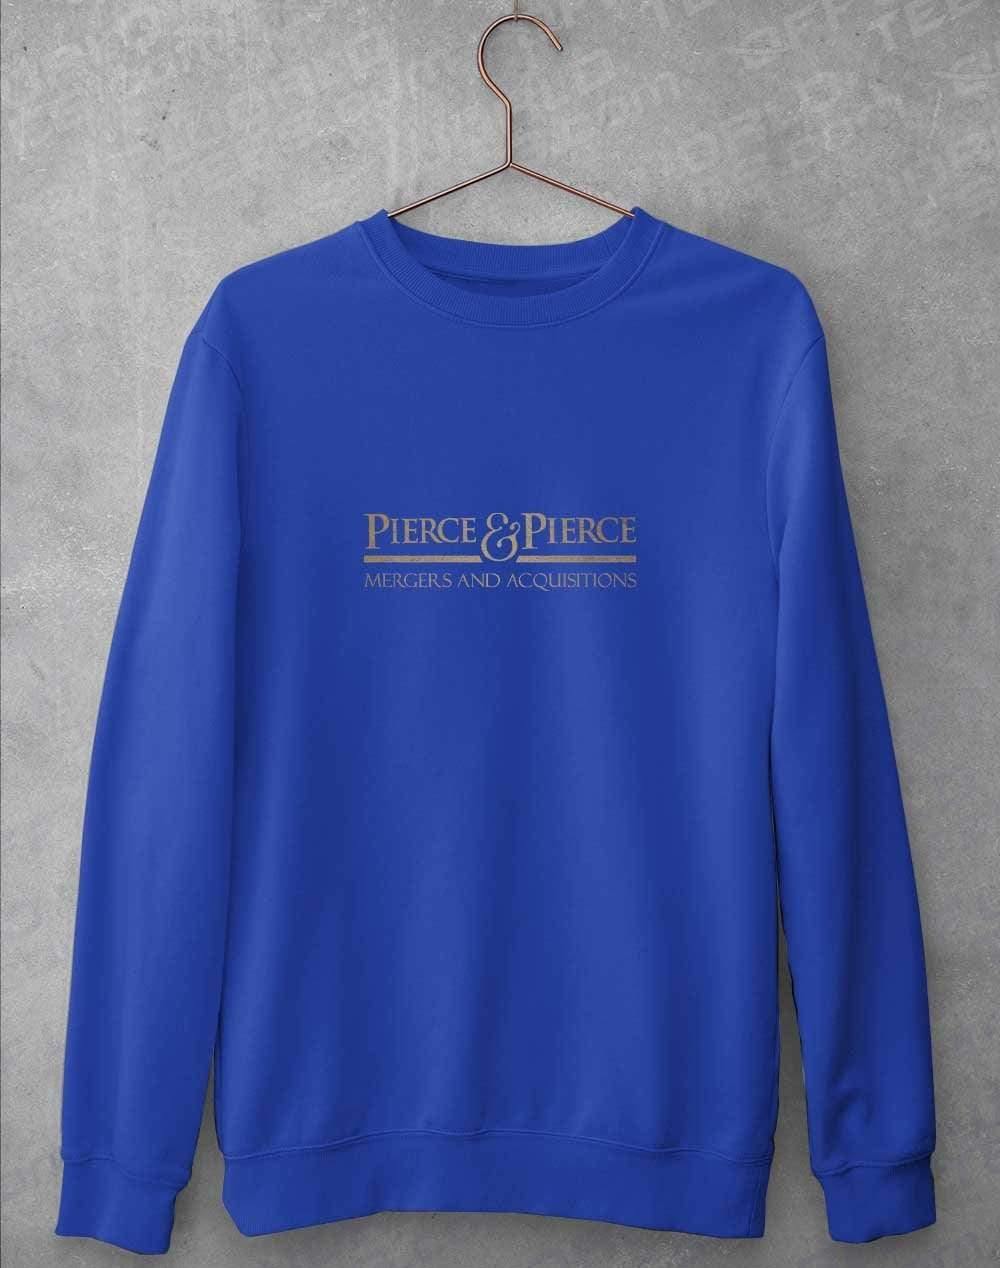 Pierce and Pierce Sweatshirt S / Royal Blue  - Off World Tees